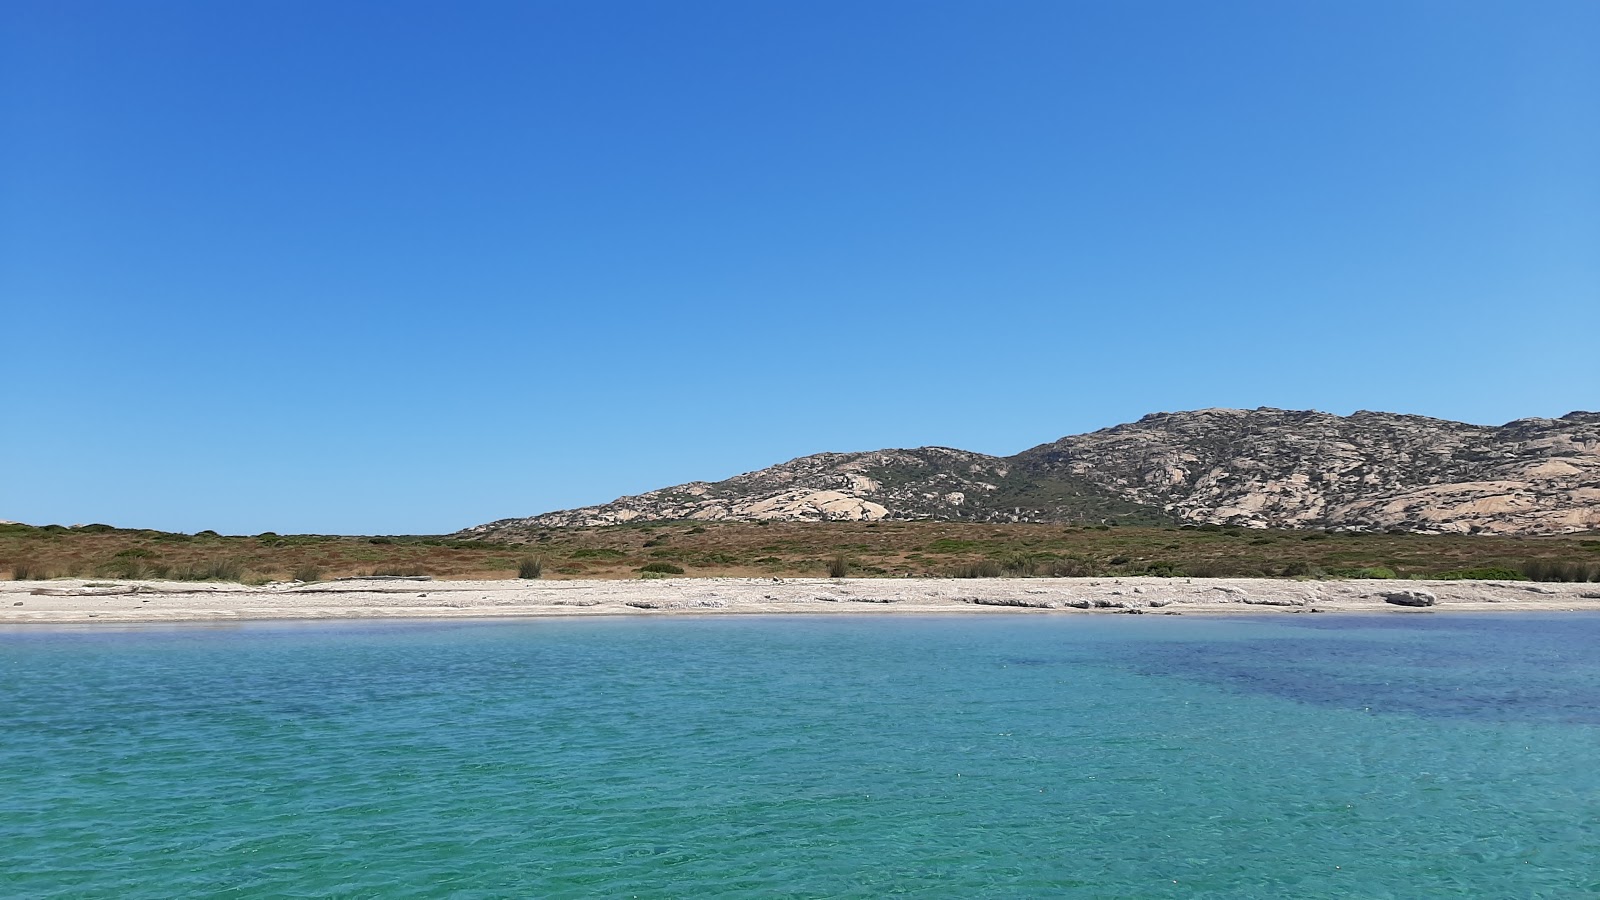 Photo of Spiaggia dello Spalmatore all'Asinara - popular place among relax connoisseurs